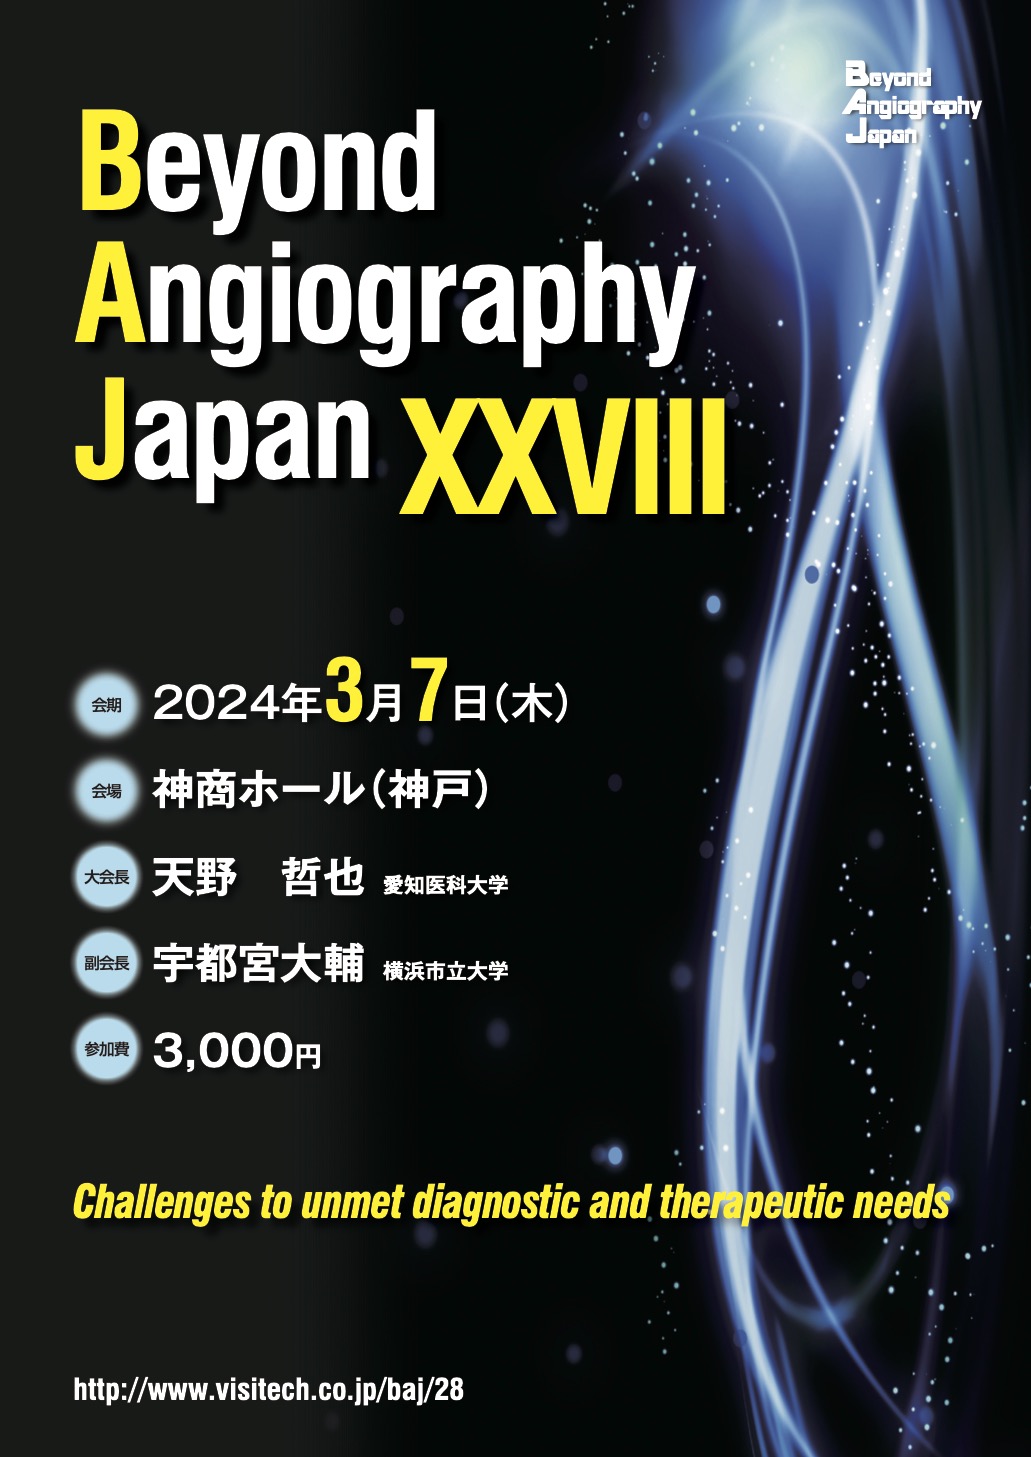 Beyond Angiography Japan